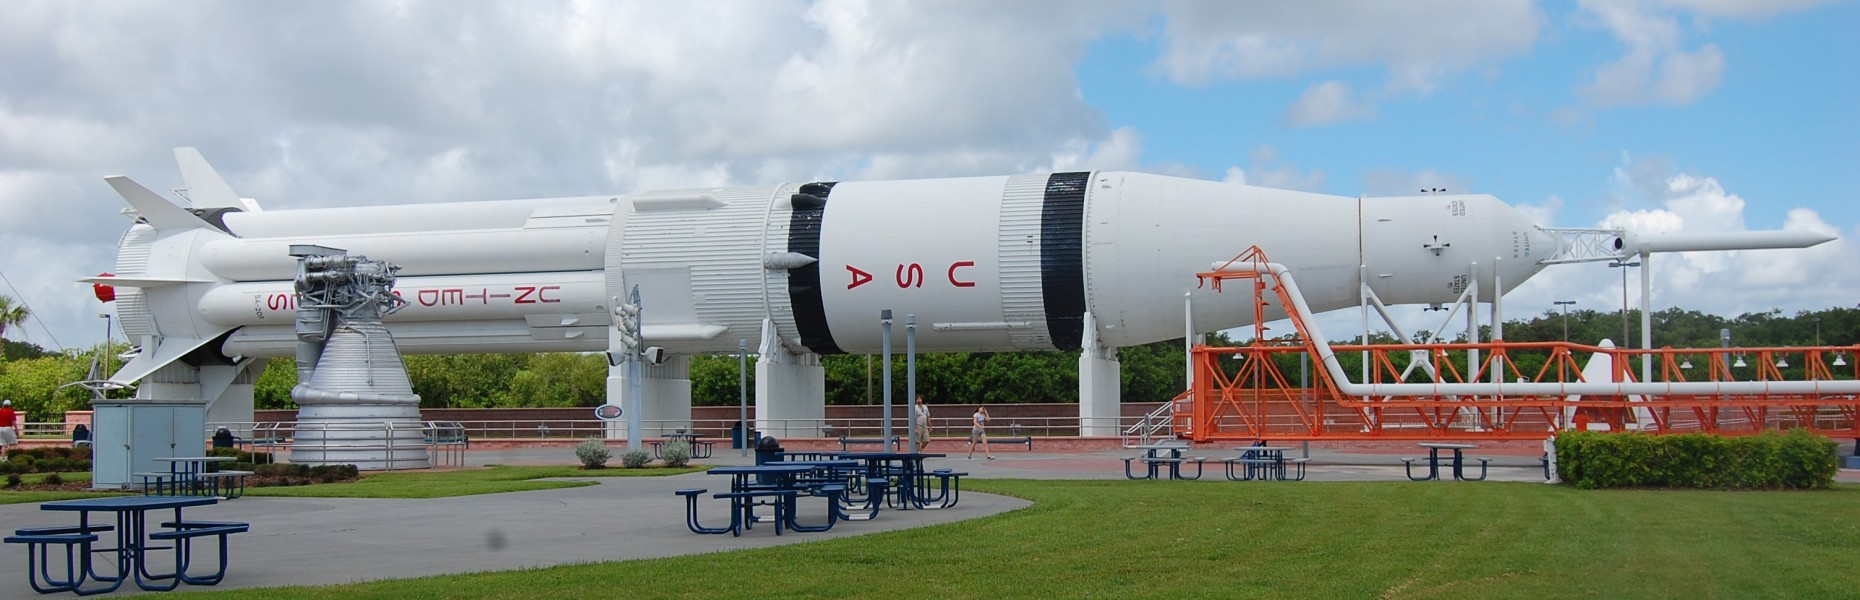 Saturn IB at KSC